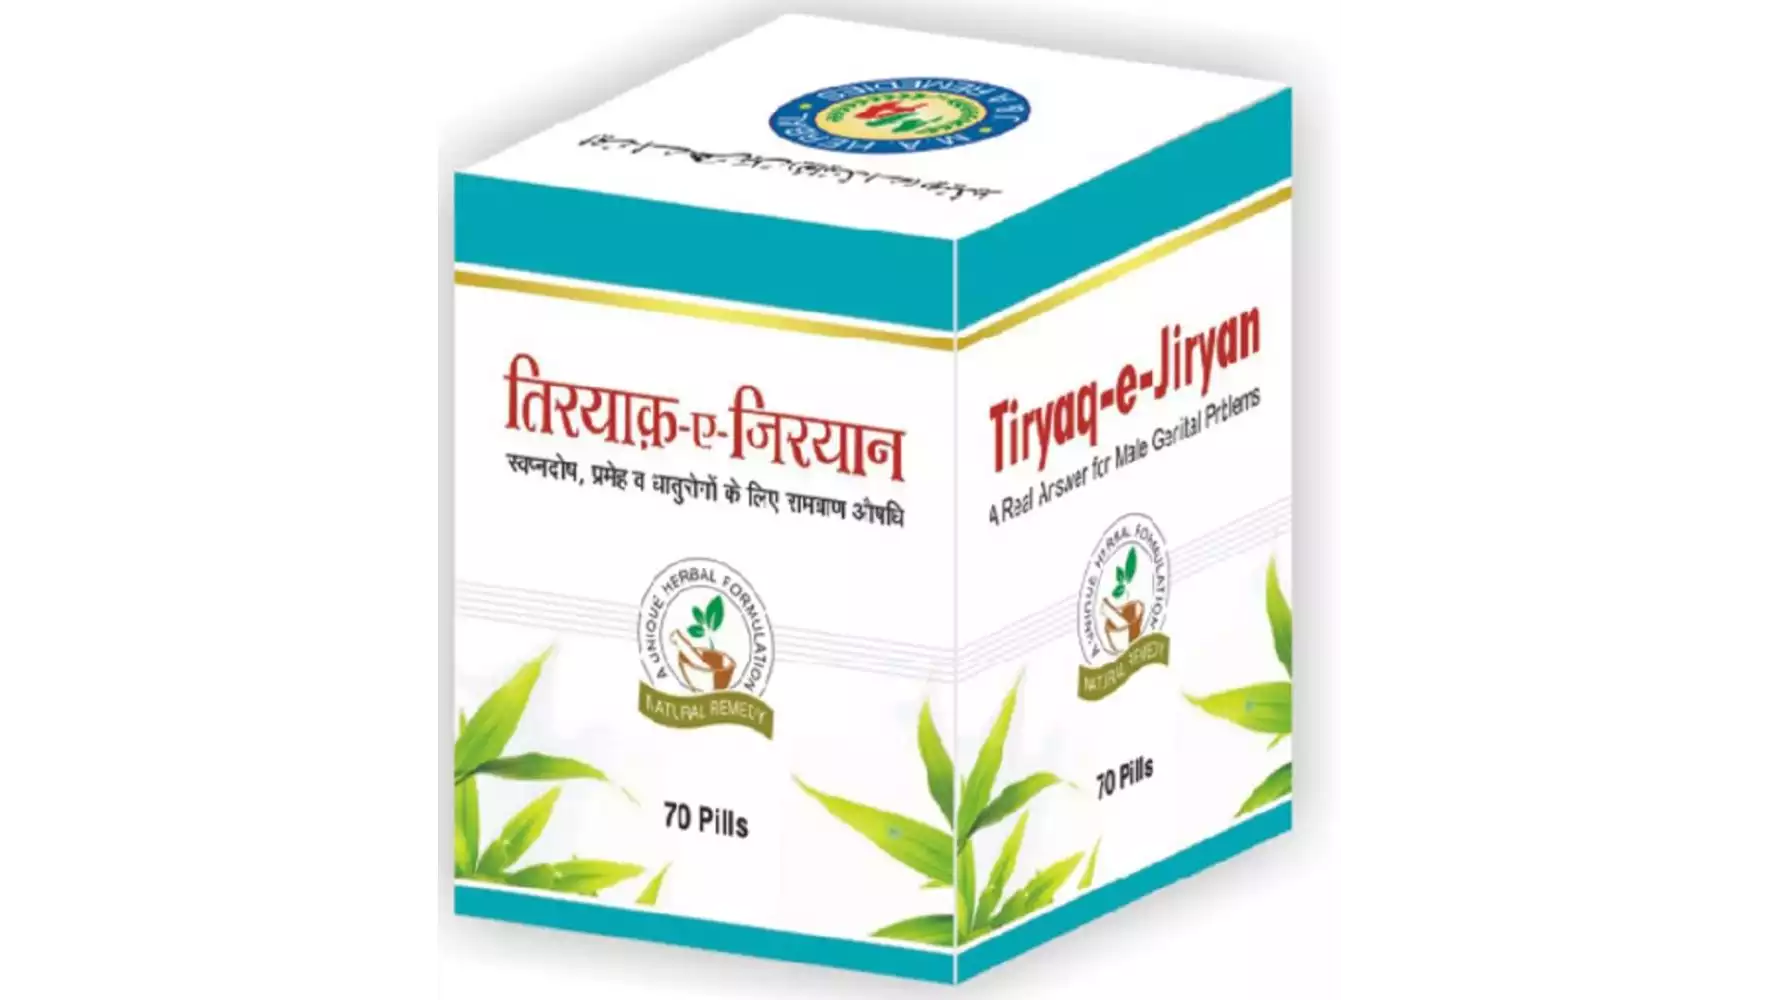 M A Herbal Tiryaq-E-Jiryan Pills (70Pills)